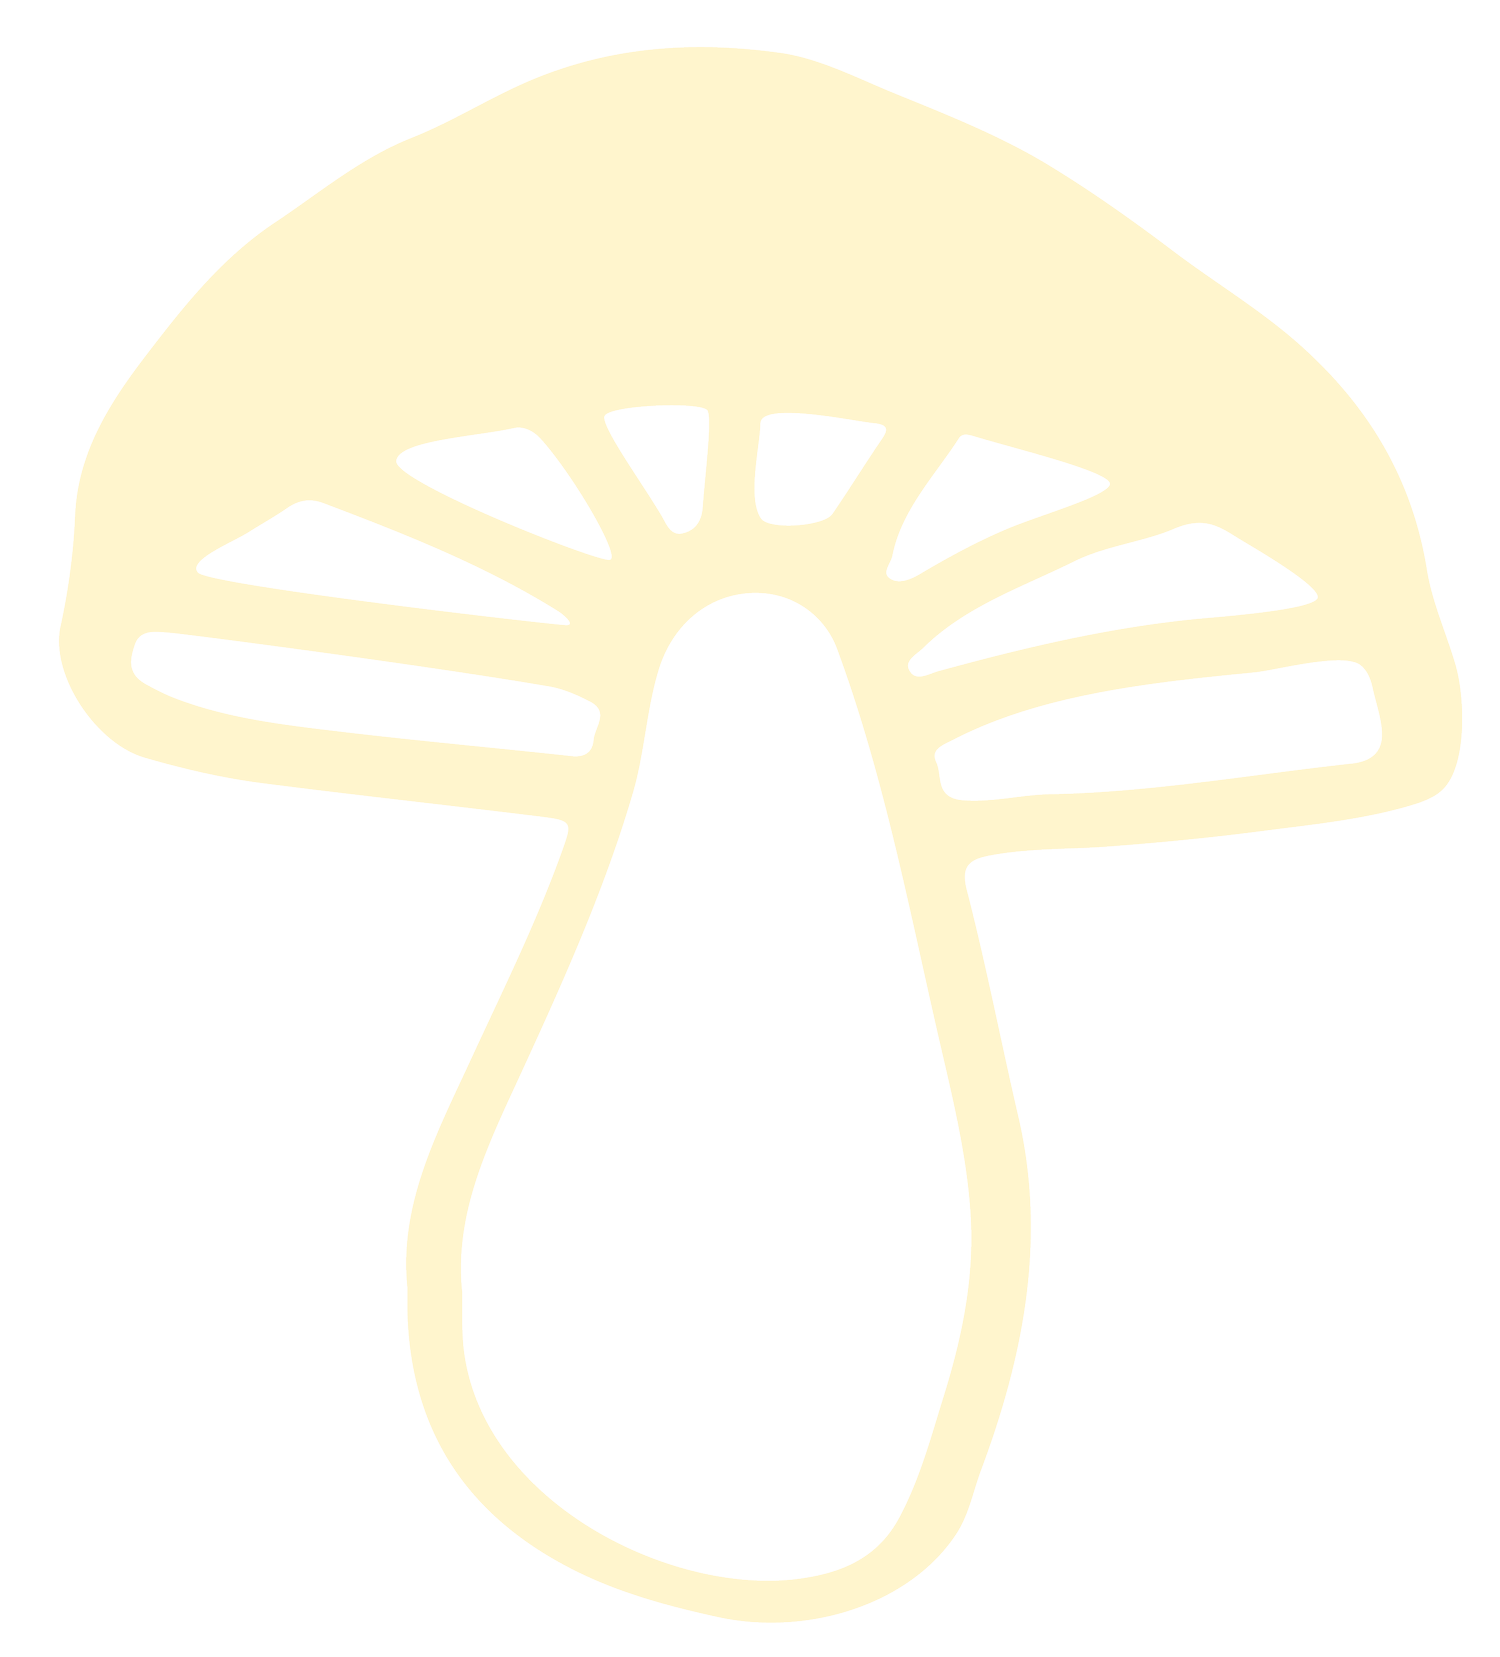 Mushroom Productions